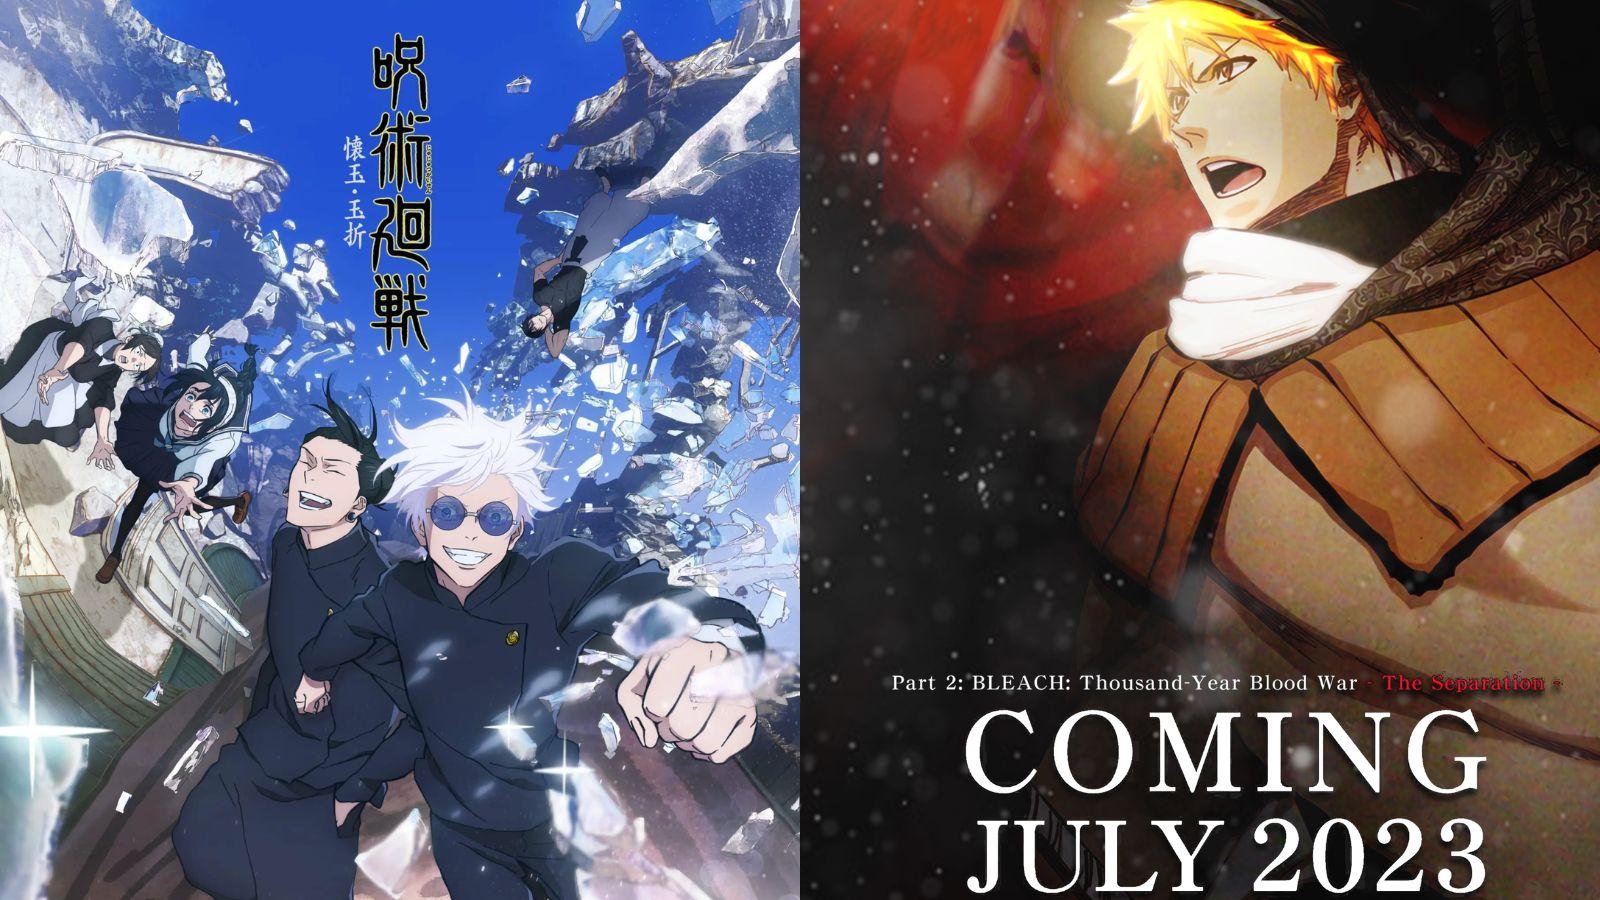 KiritoNarukami's Anime Selection (Summer 2021 Edition